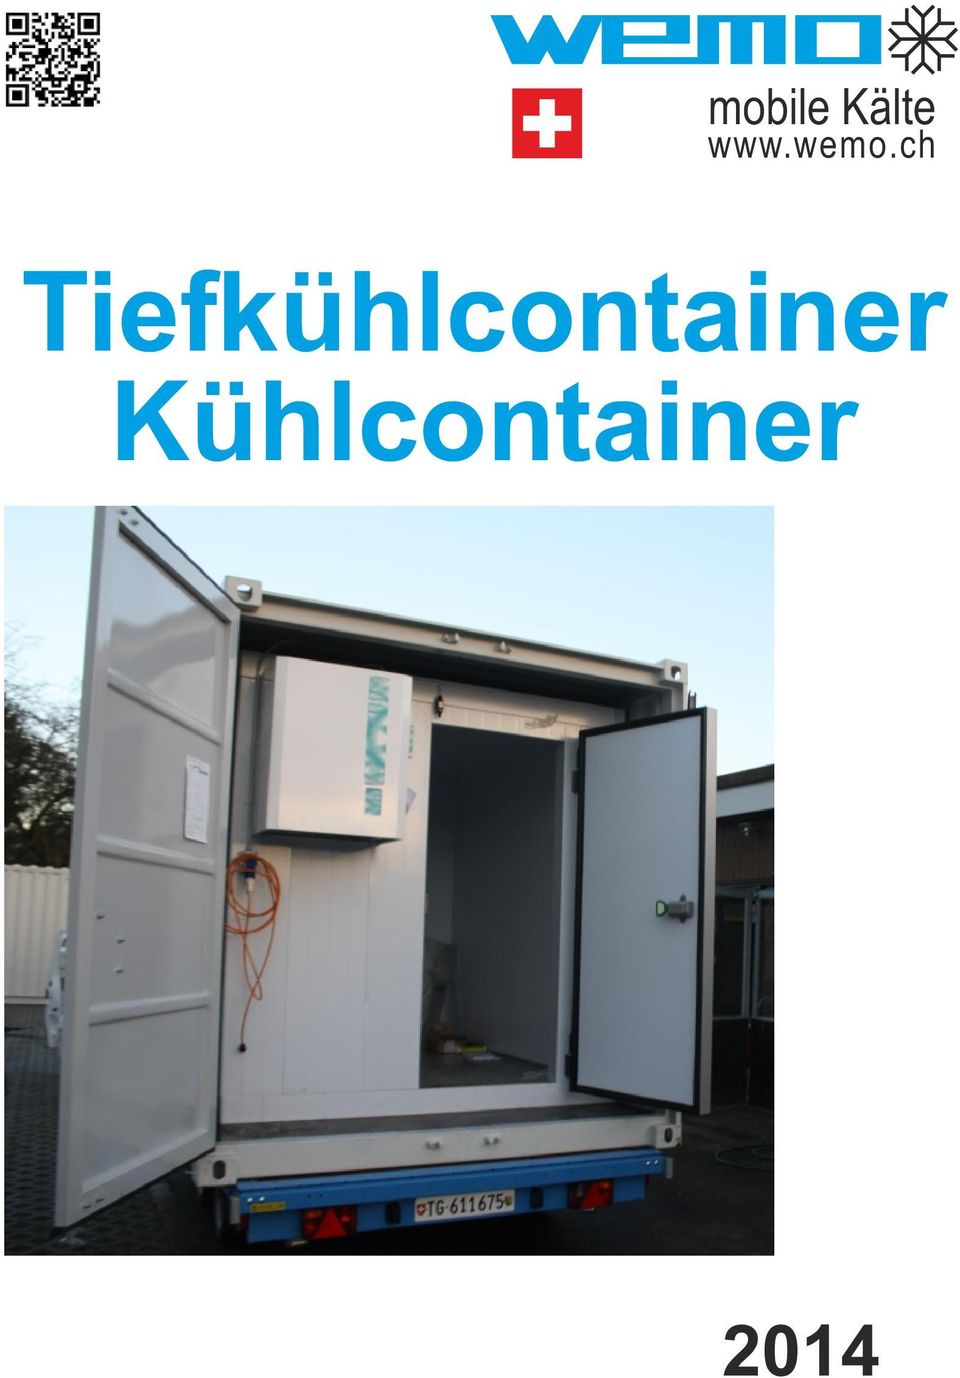 Seecontainer Vermietung miete contanex Mobile Kühlzelle und Tiefkühlzelle Mobile Kühlzellen, Tiefkühlzellen, Kühlcontainer, Tiefkühlcontainer (reefer), Kühlung, Einfrierzellen, Temperierzellen,